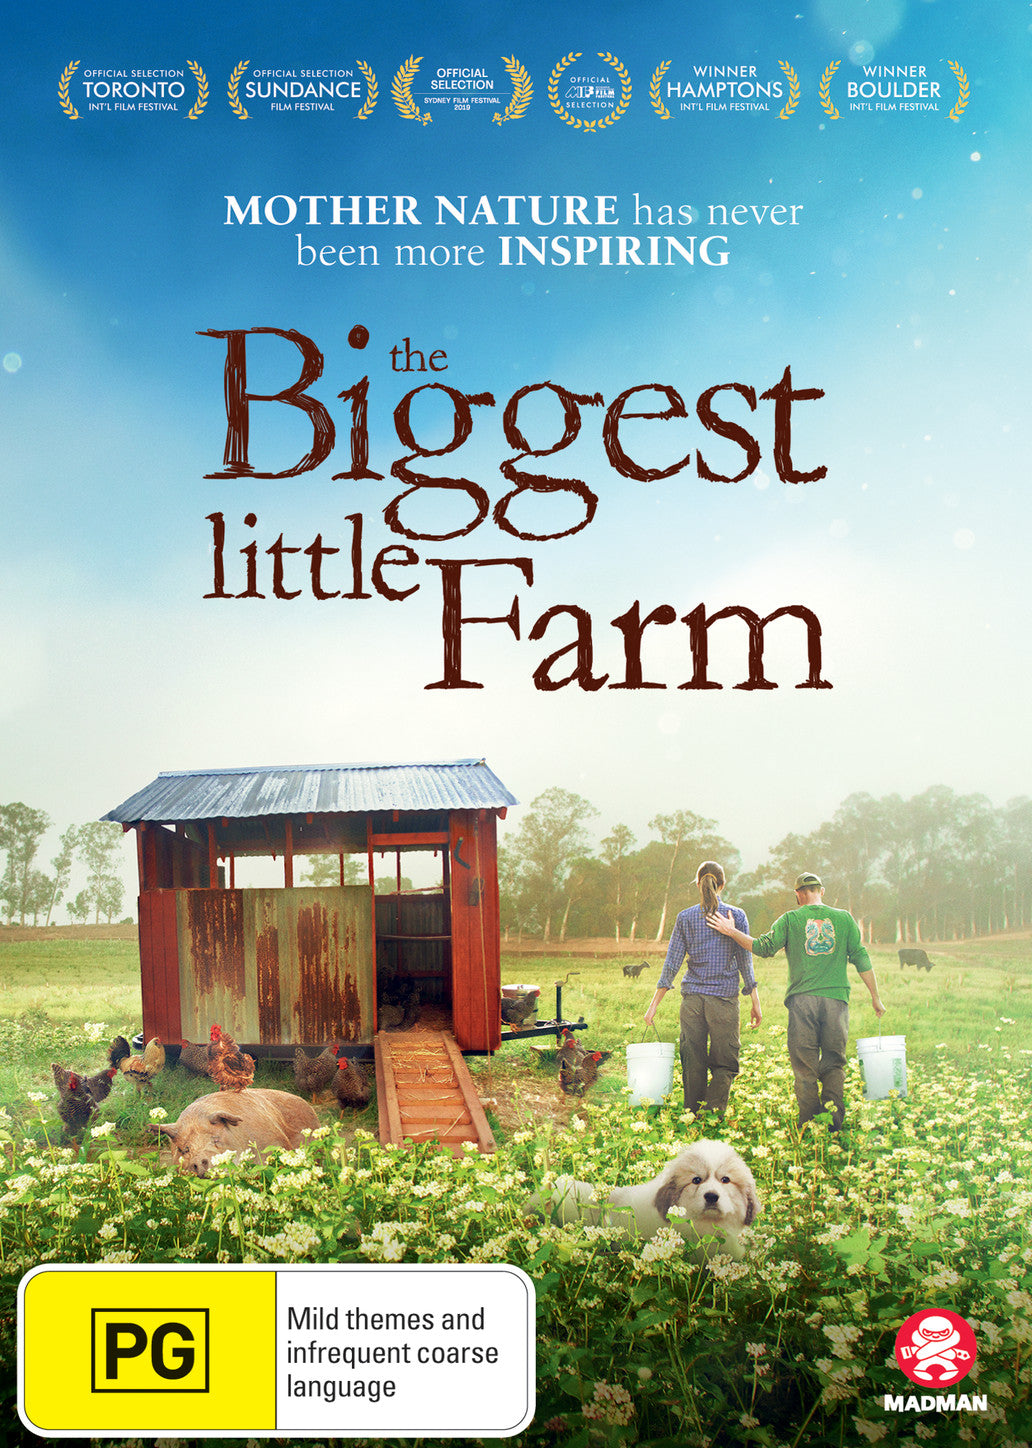 THE BIGGEST LITTLE FARM